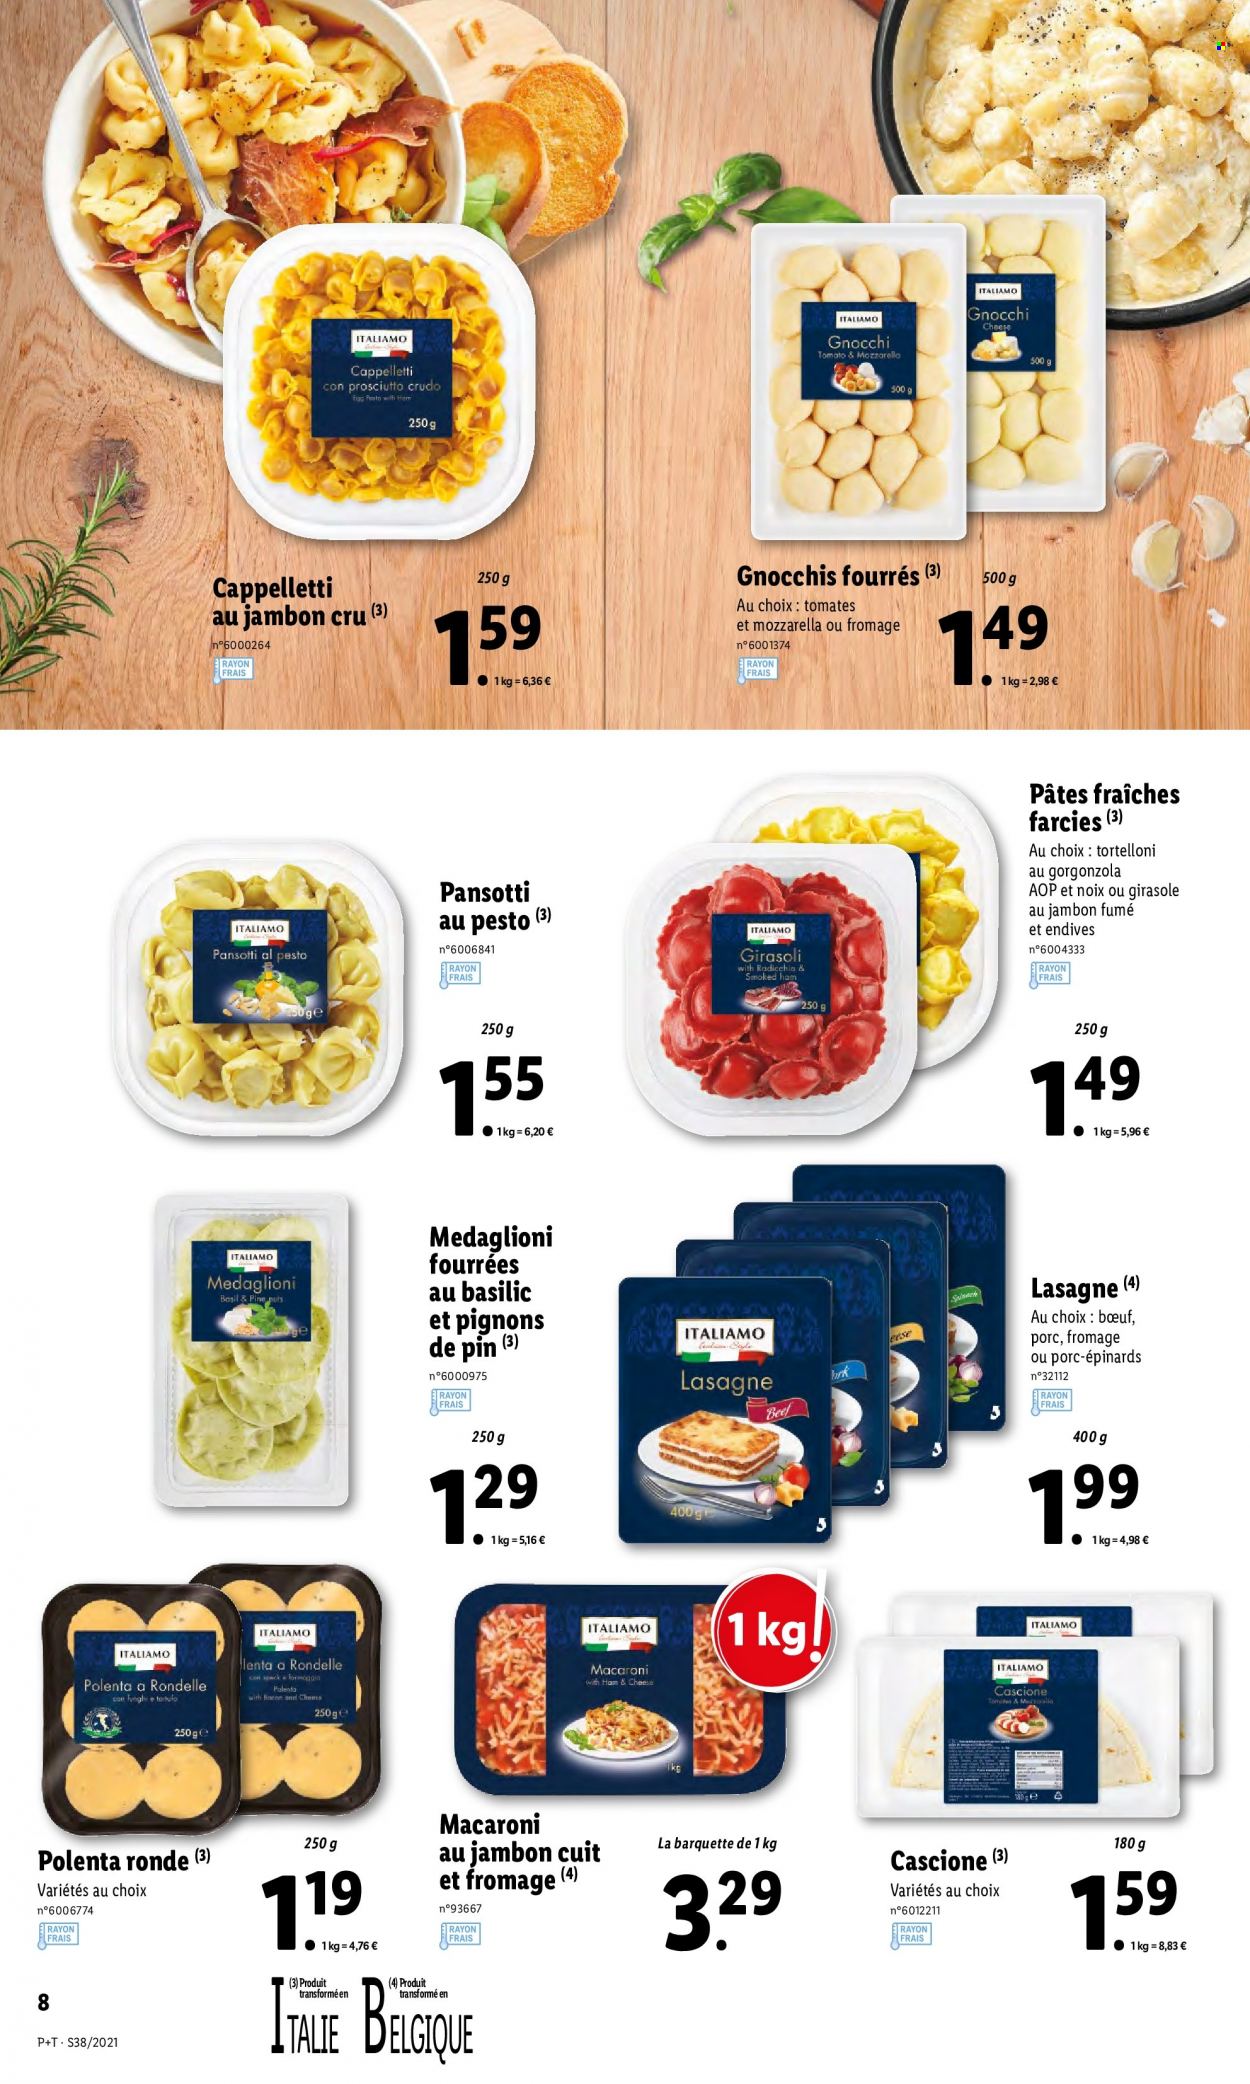 thumbnail - Catalogue Lidl - 22/09/2021 - 28/09/2021 - Produits soldés - épinard, gnocchi, tortellini, lasagnes, girasoli, cascione, prosciutto, polenta, pâtes, cappelletti, medaglioni, macaroni, pansotti. Page 10.